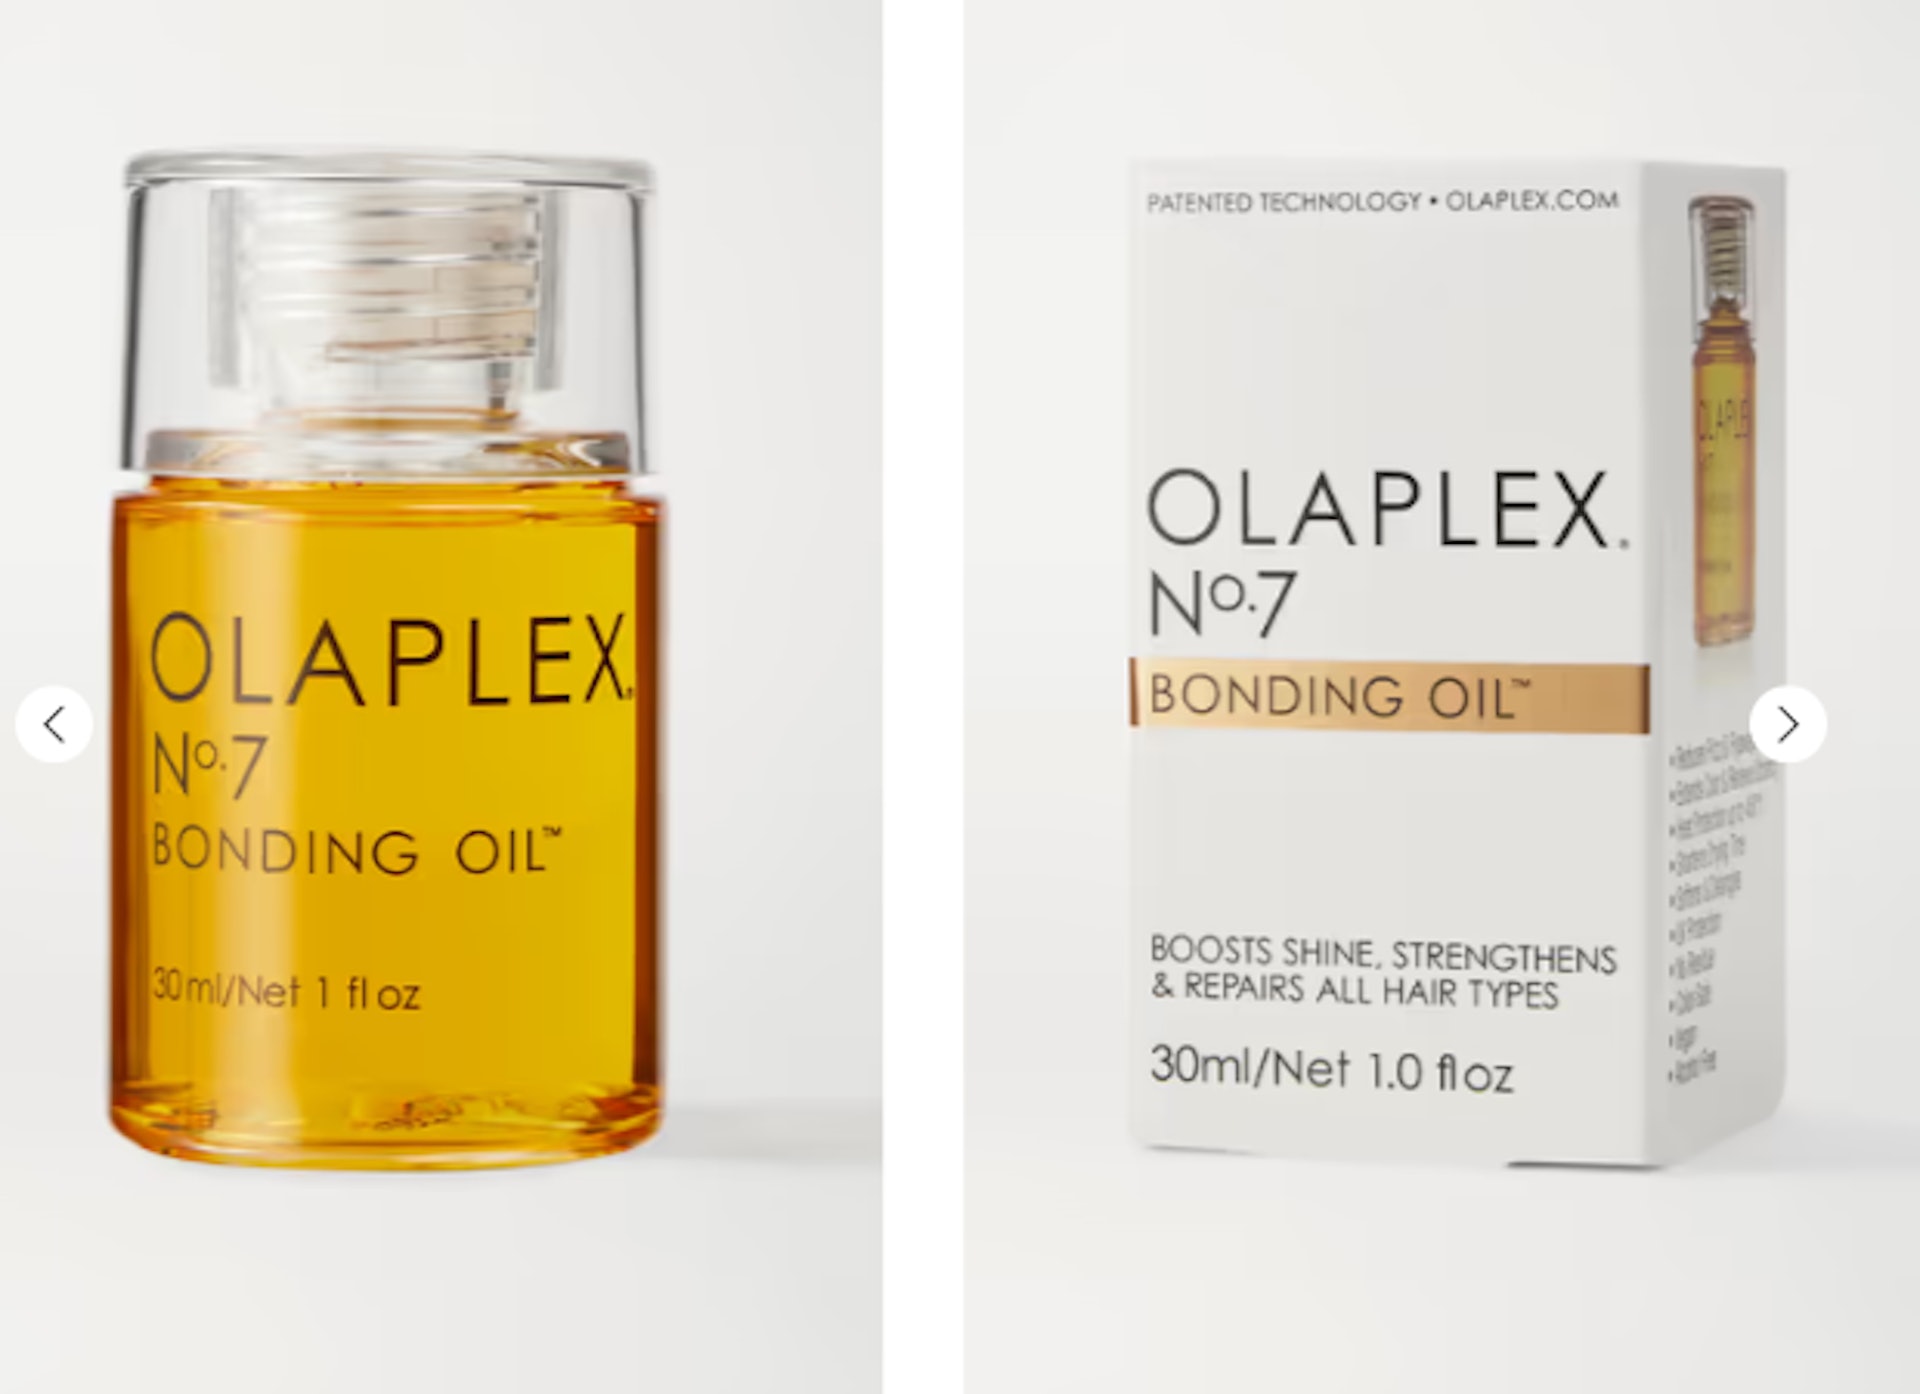 Olaplex 的產品均經悉心研發，專為修護日常造型、環境因素和歲月對髮絲帶來的損傷而生。這款 “Bonding Oil™” 頭髮修護精油質地輕盈，富含滋養成分，可有效撫平毛糙碎髮，同時有防曬和熱防護功效。只需每次取用幾滴，長久使用，便可收穫更為柔軟健康的髮質。